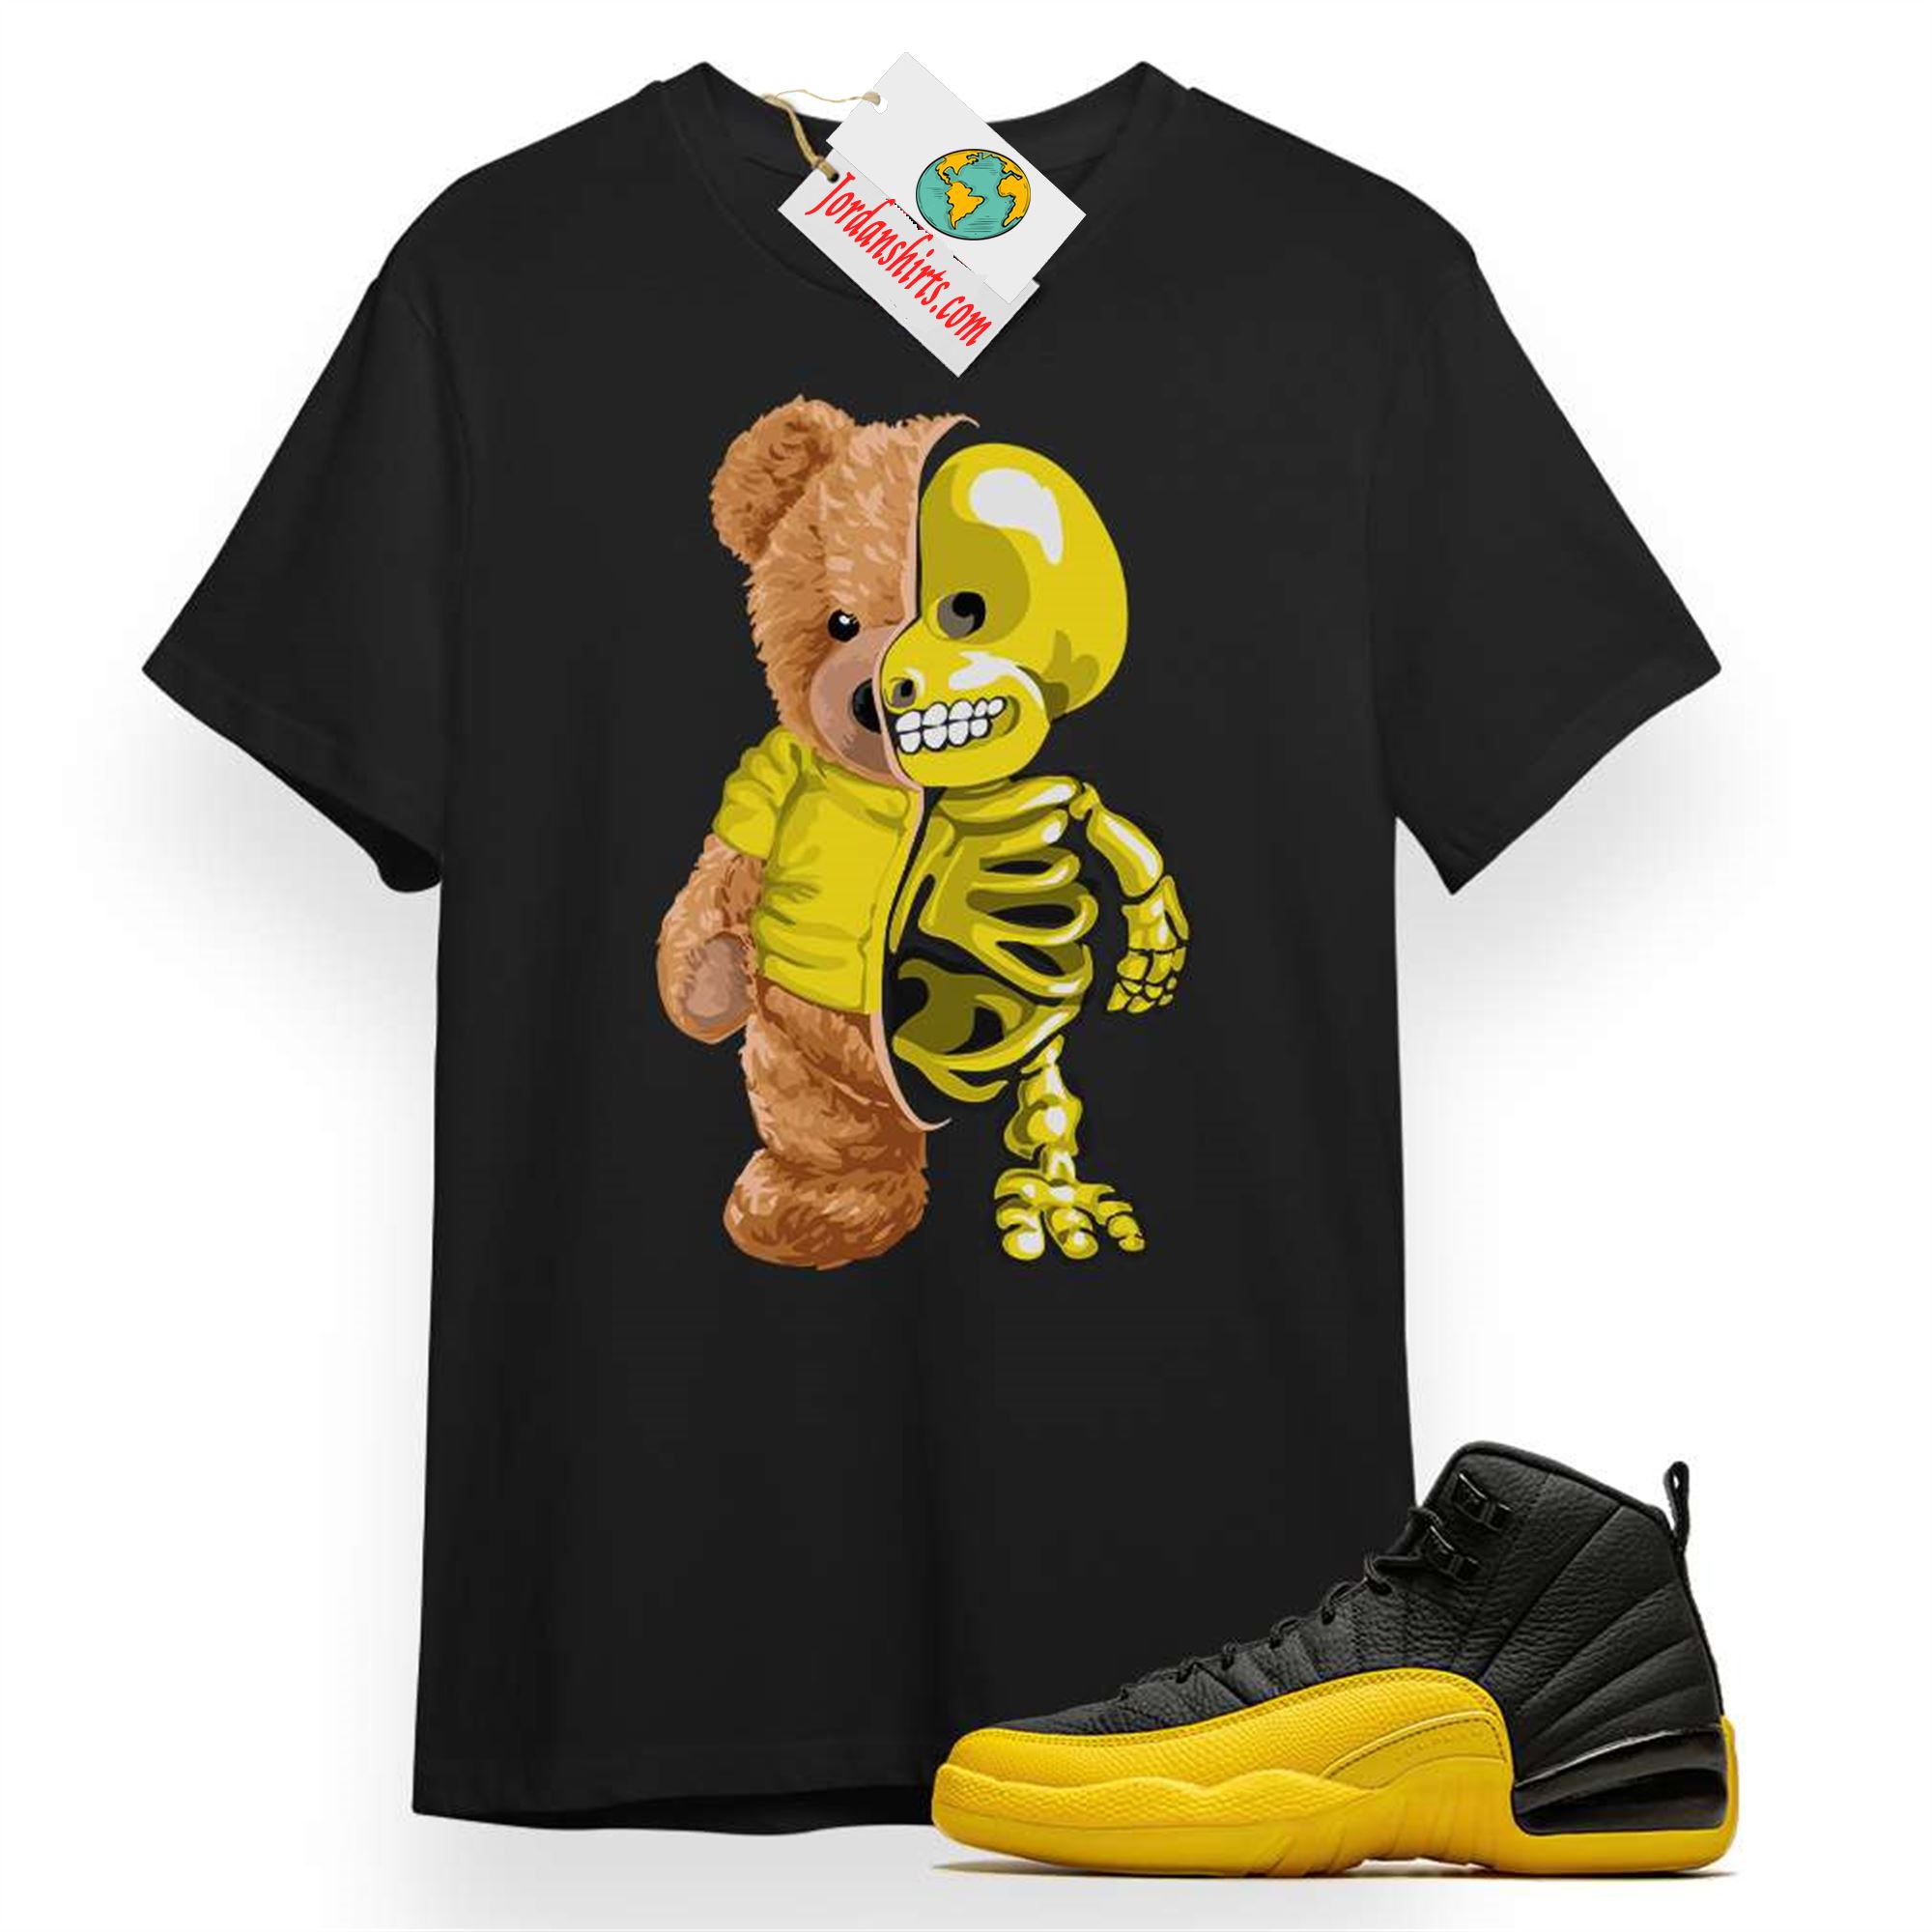 Jordan 12 Shirt, Teddy Bear Terminator Black T-shirt Air Jordan 12 University Gold 12s Plus Size Up To 5xl